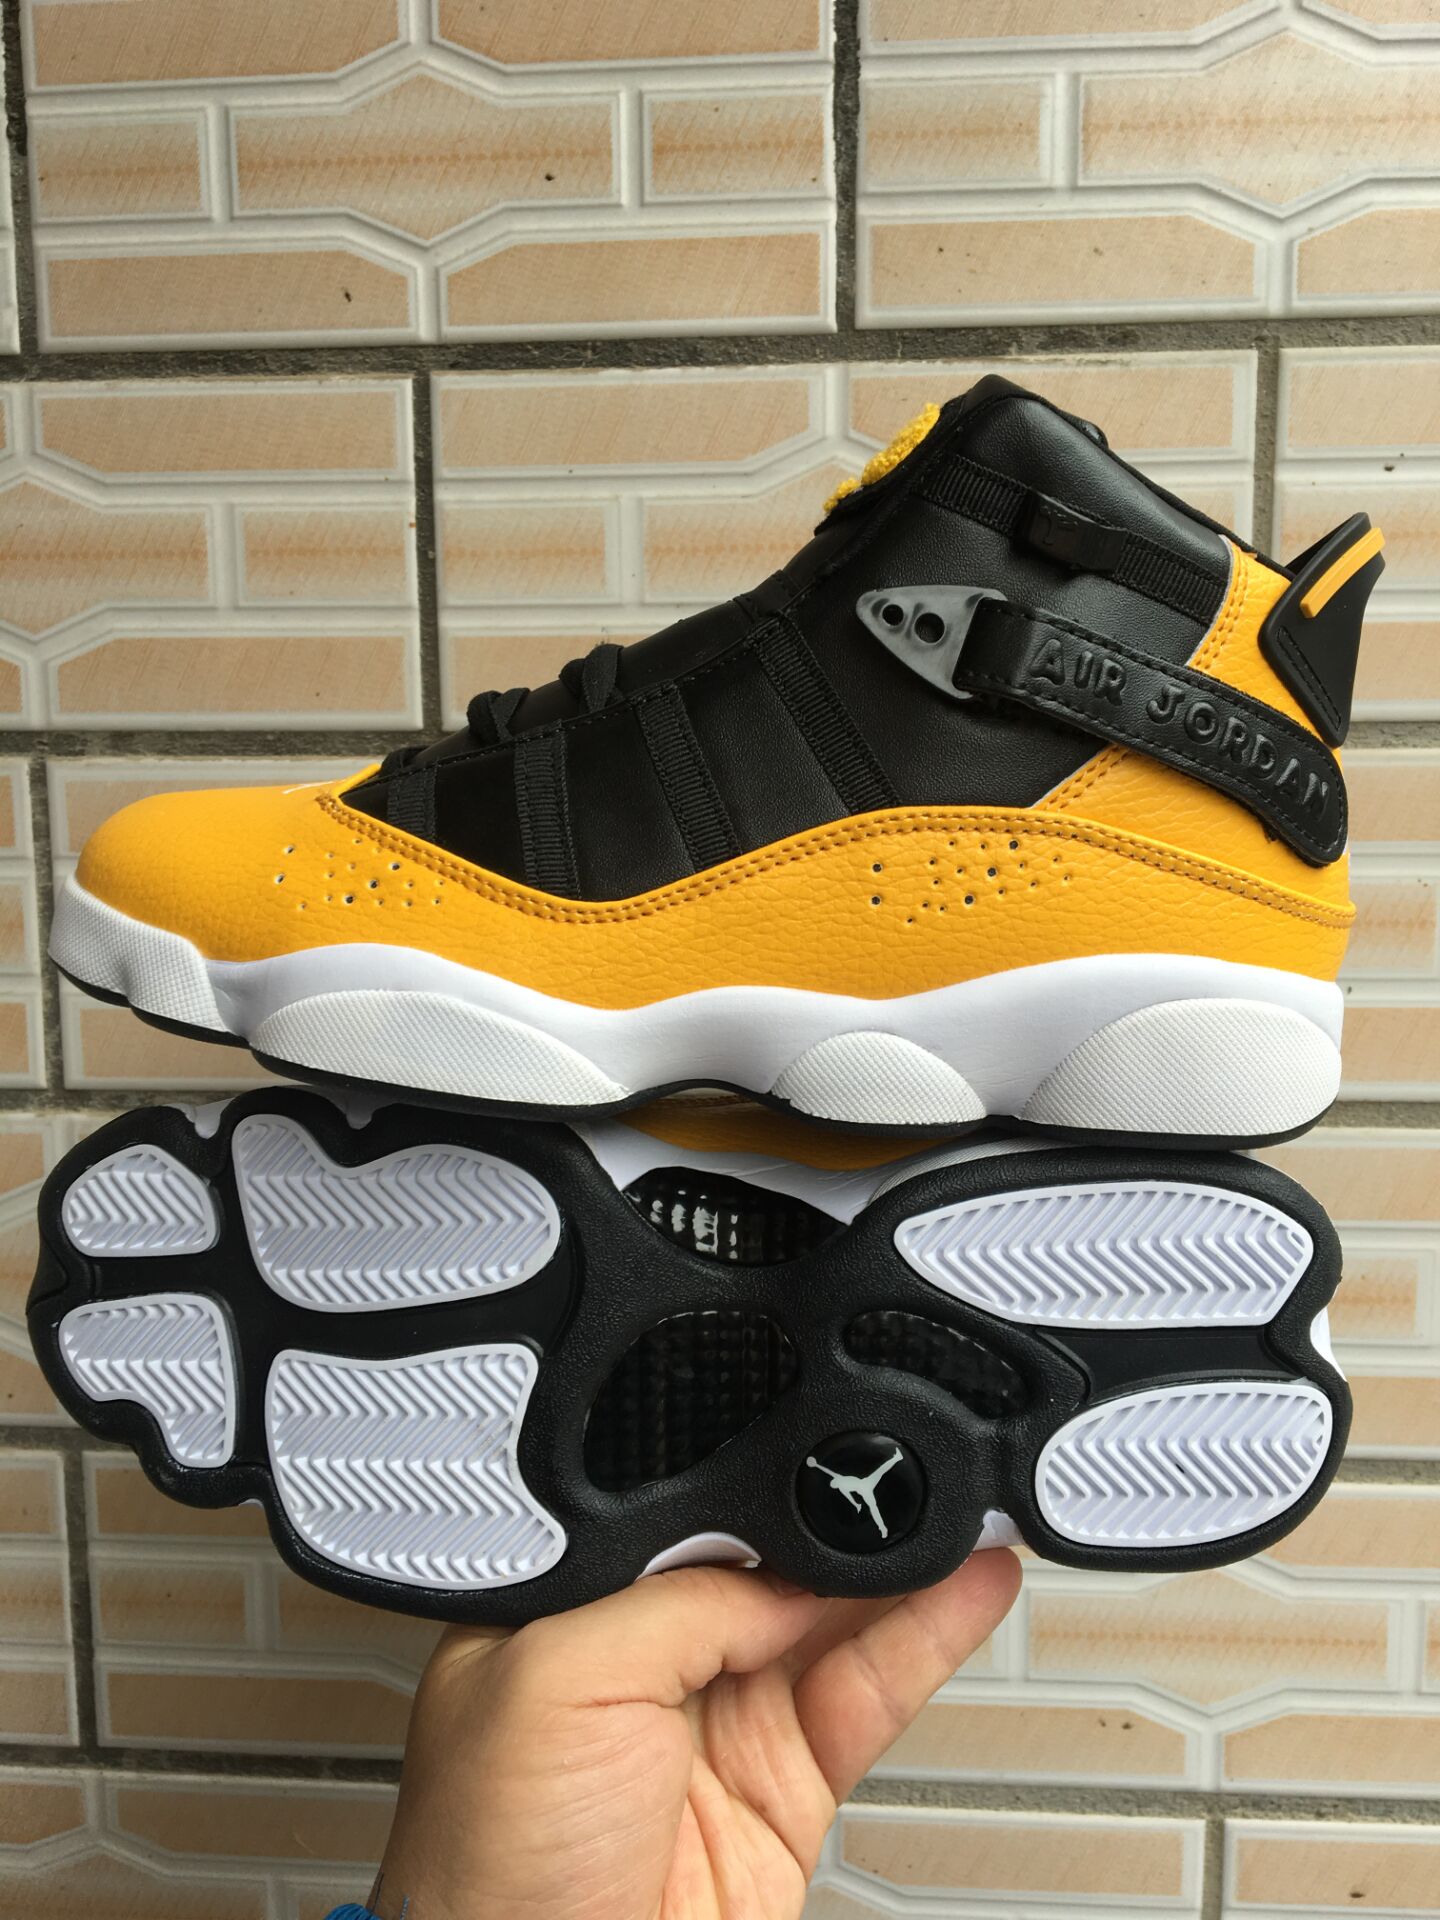 New Air Jordan Six Rings Black Yellow White Shoes